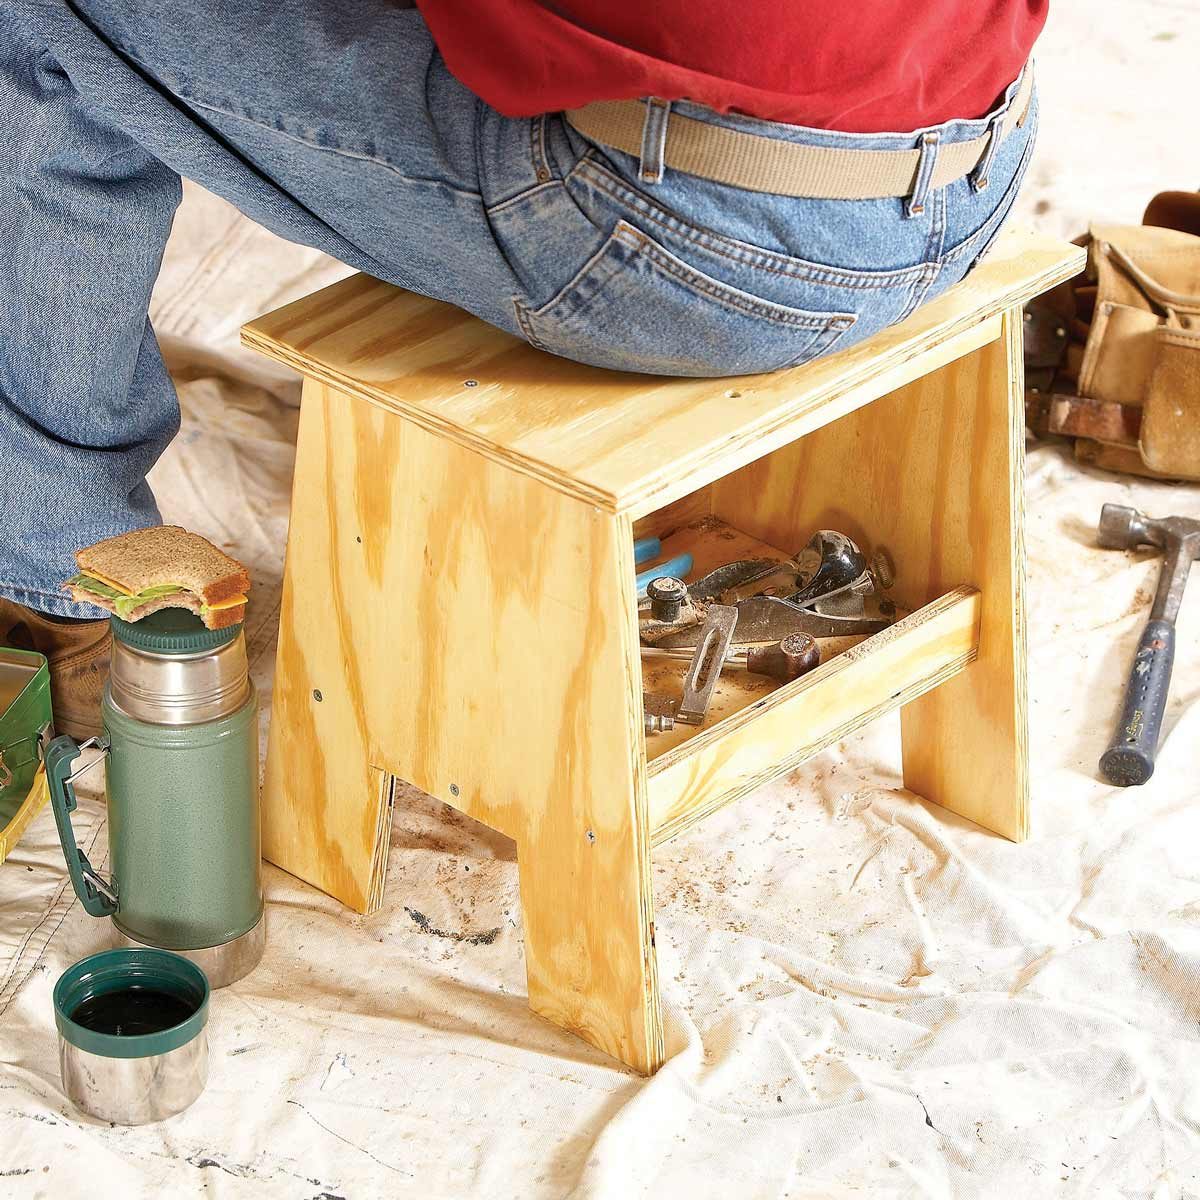 Handyman woodworking tools diy projects